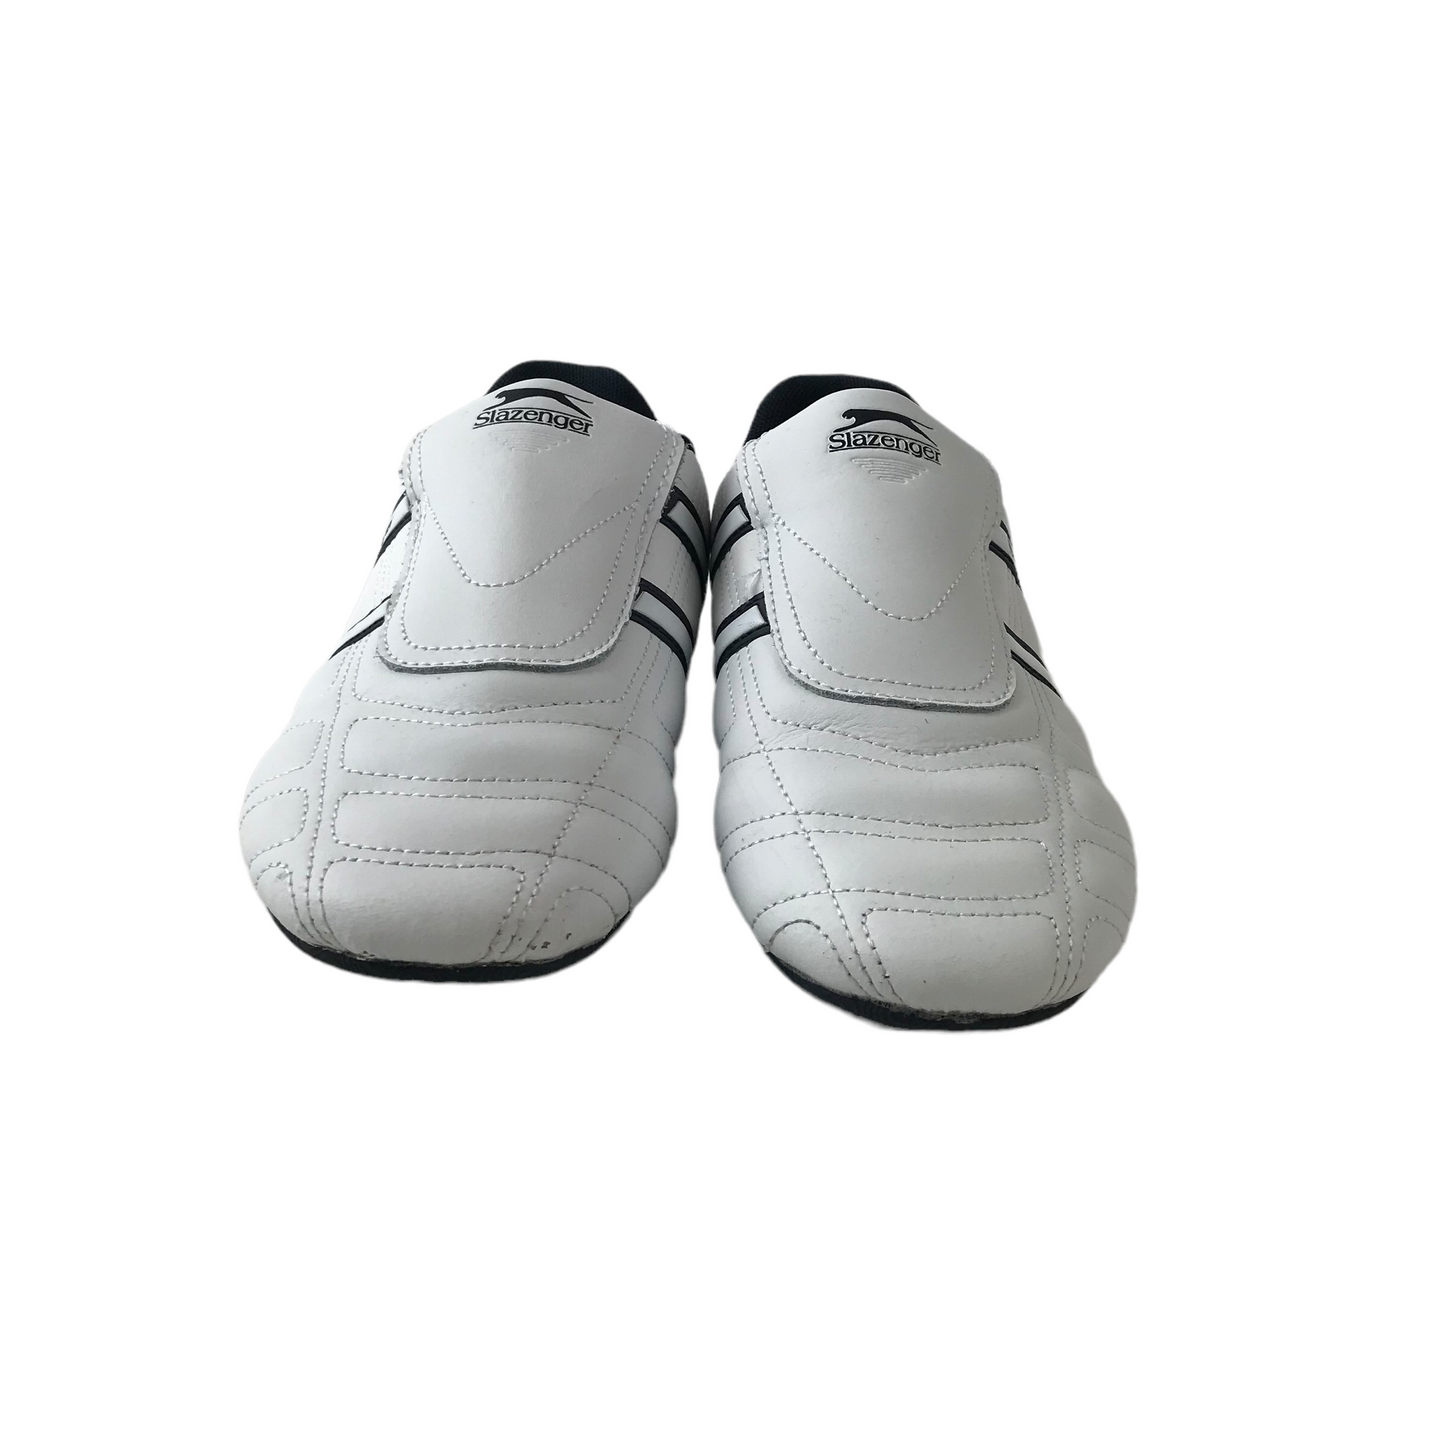 Slazenger Warrior White Slip-on Trainers Shoes Size UK 5